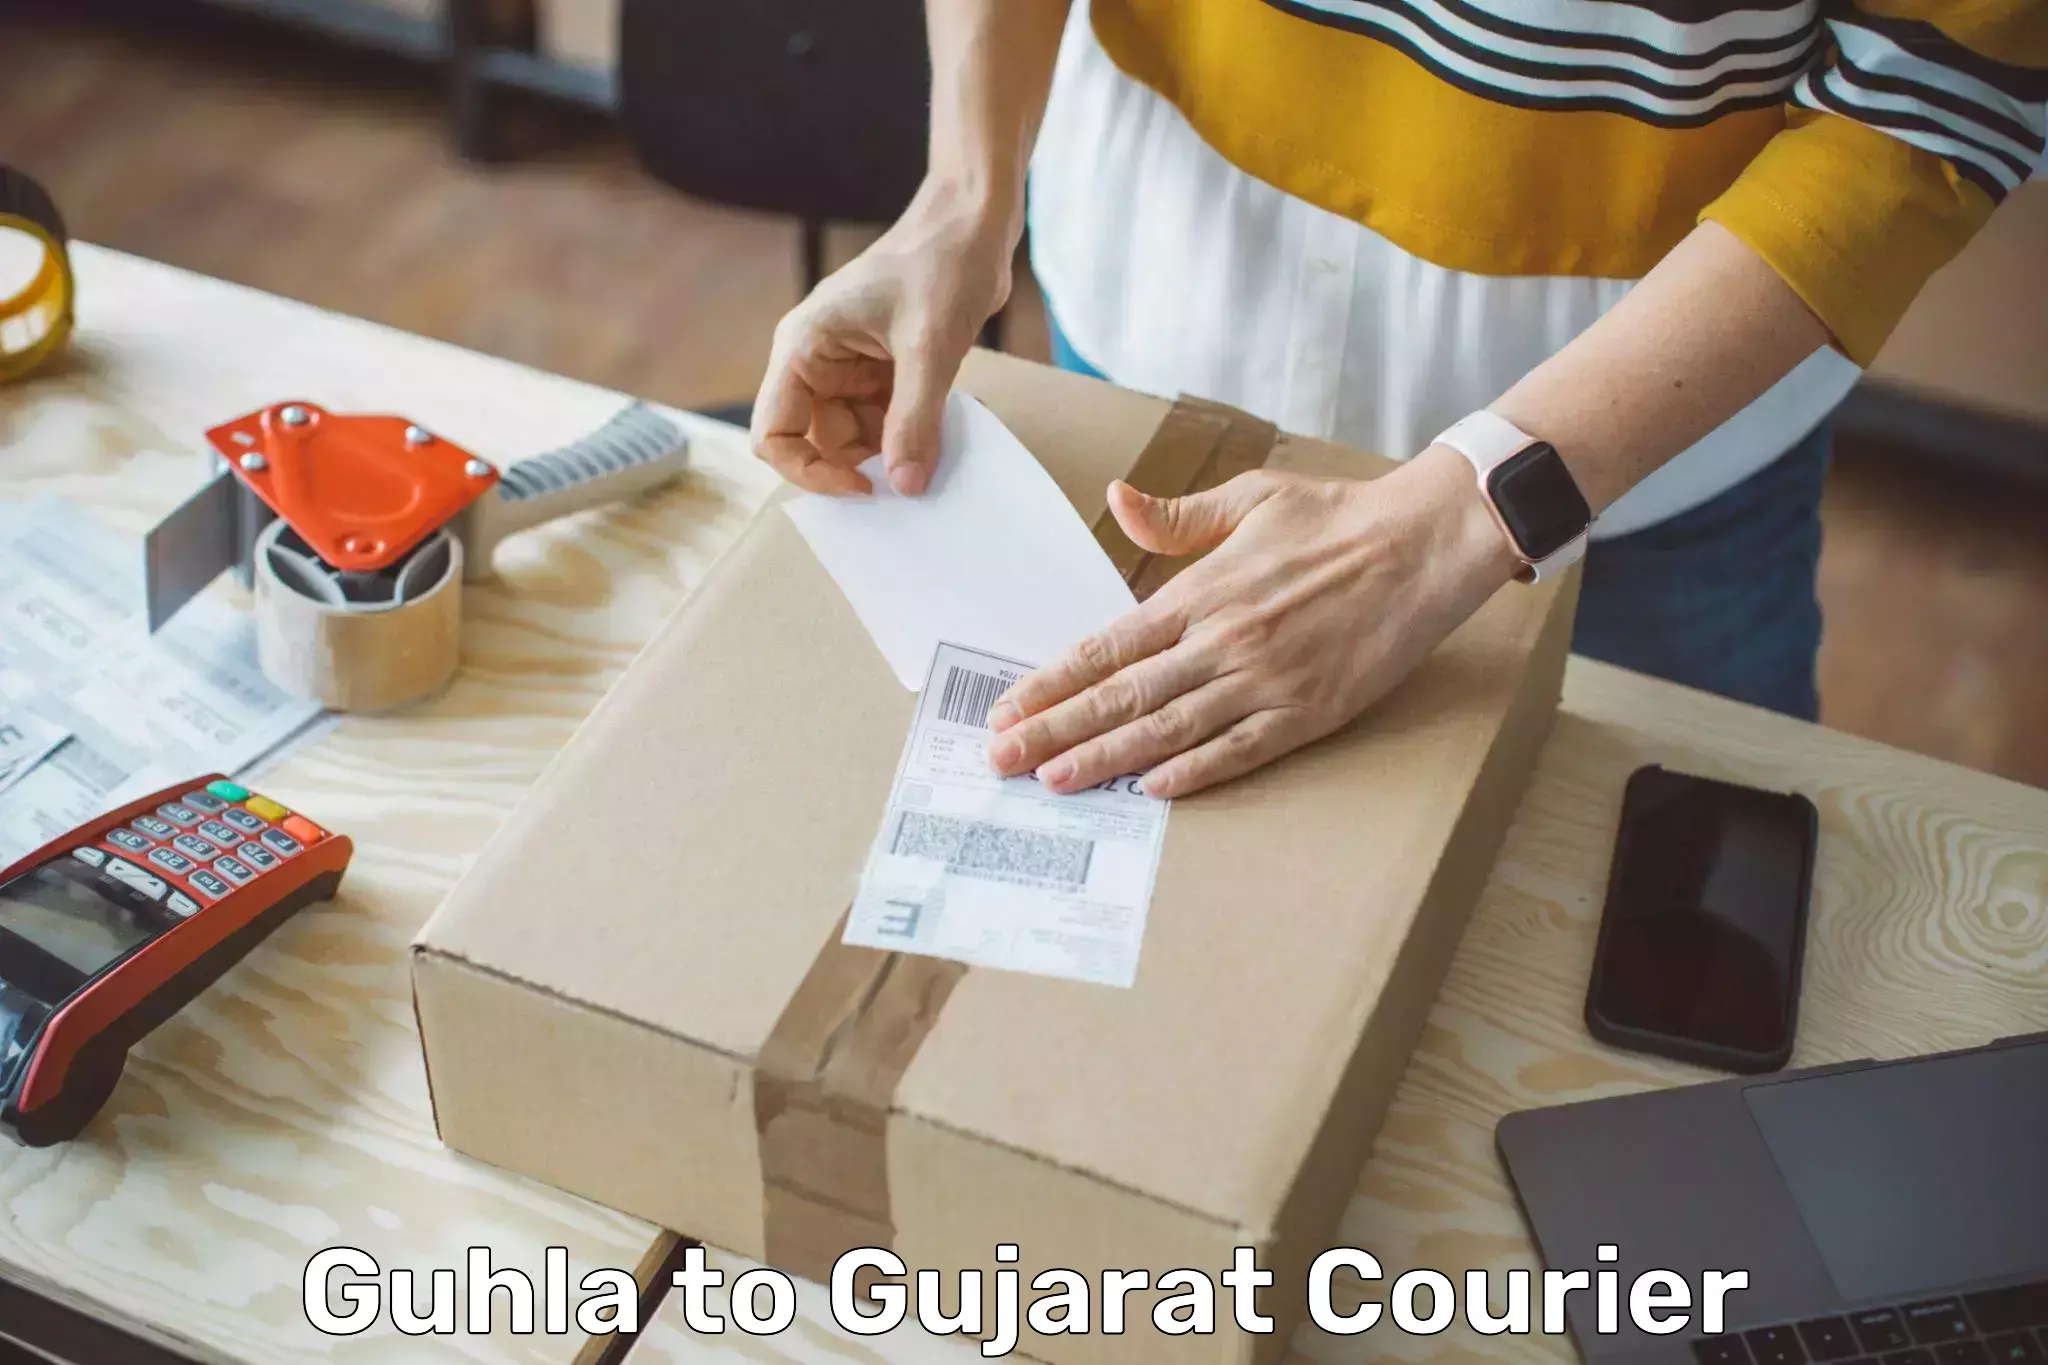 Retail shipping solutions Guhla to Surat